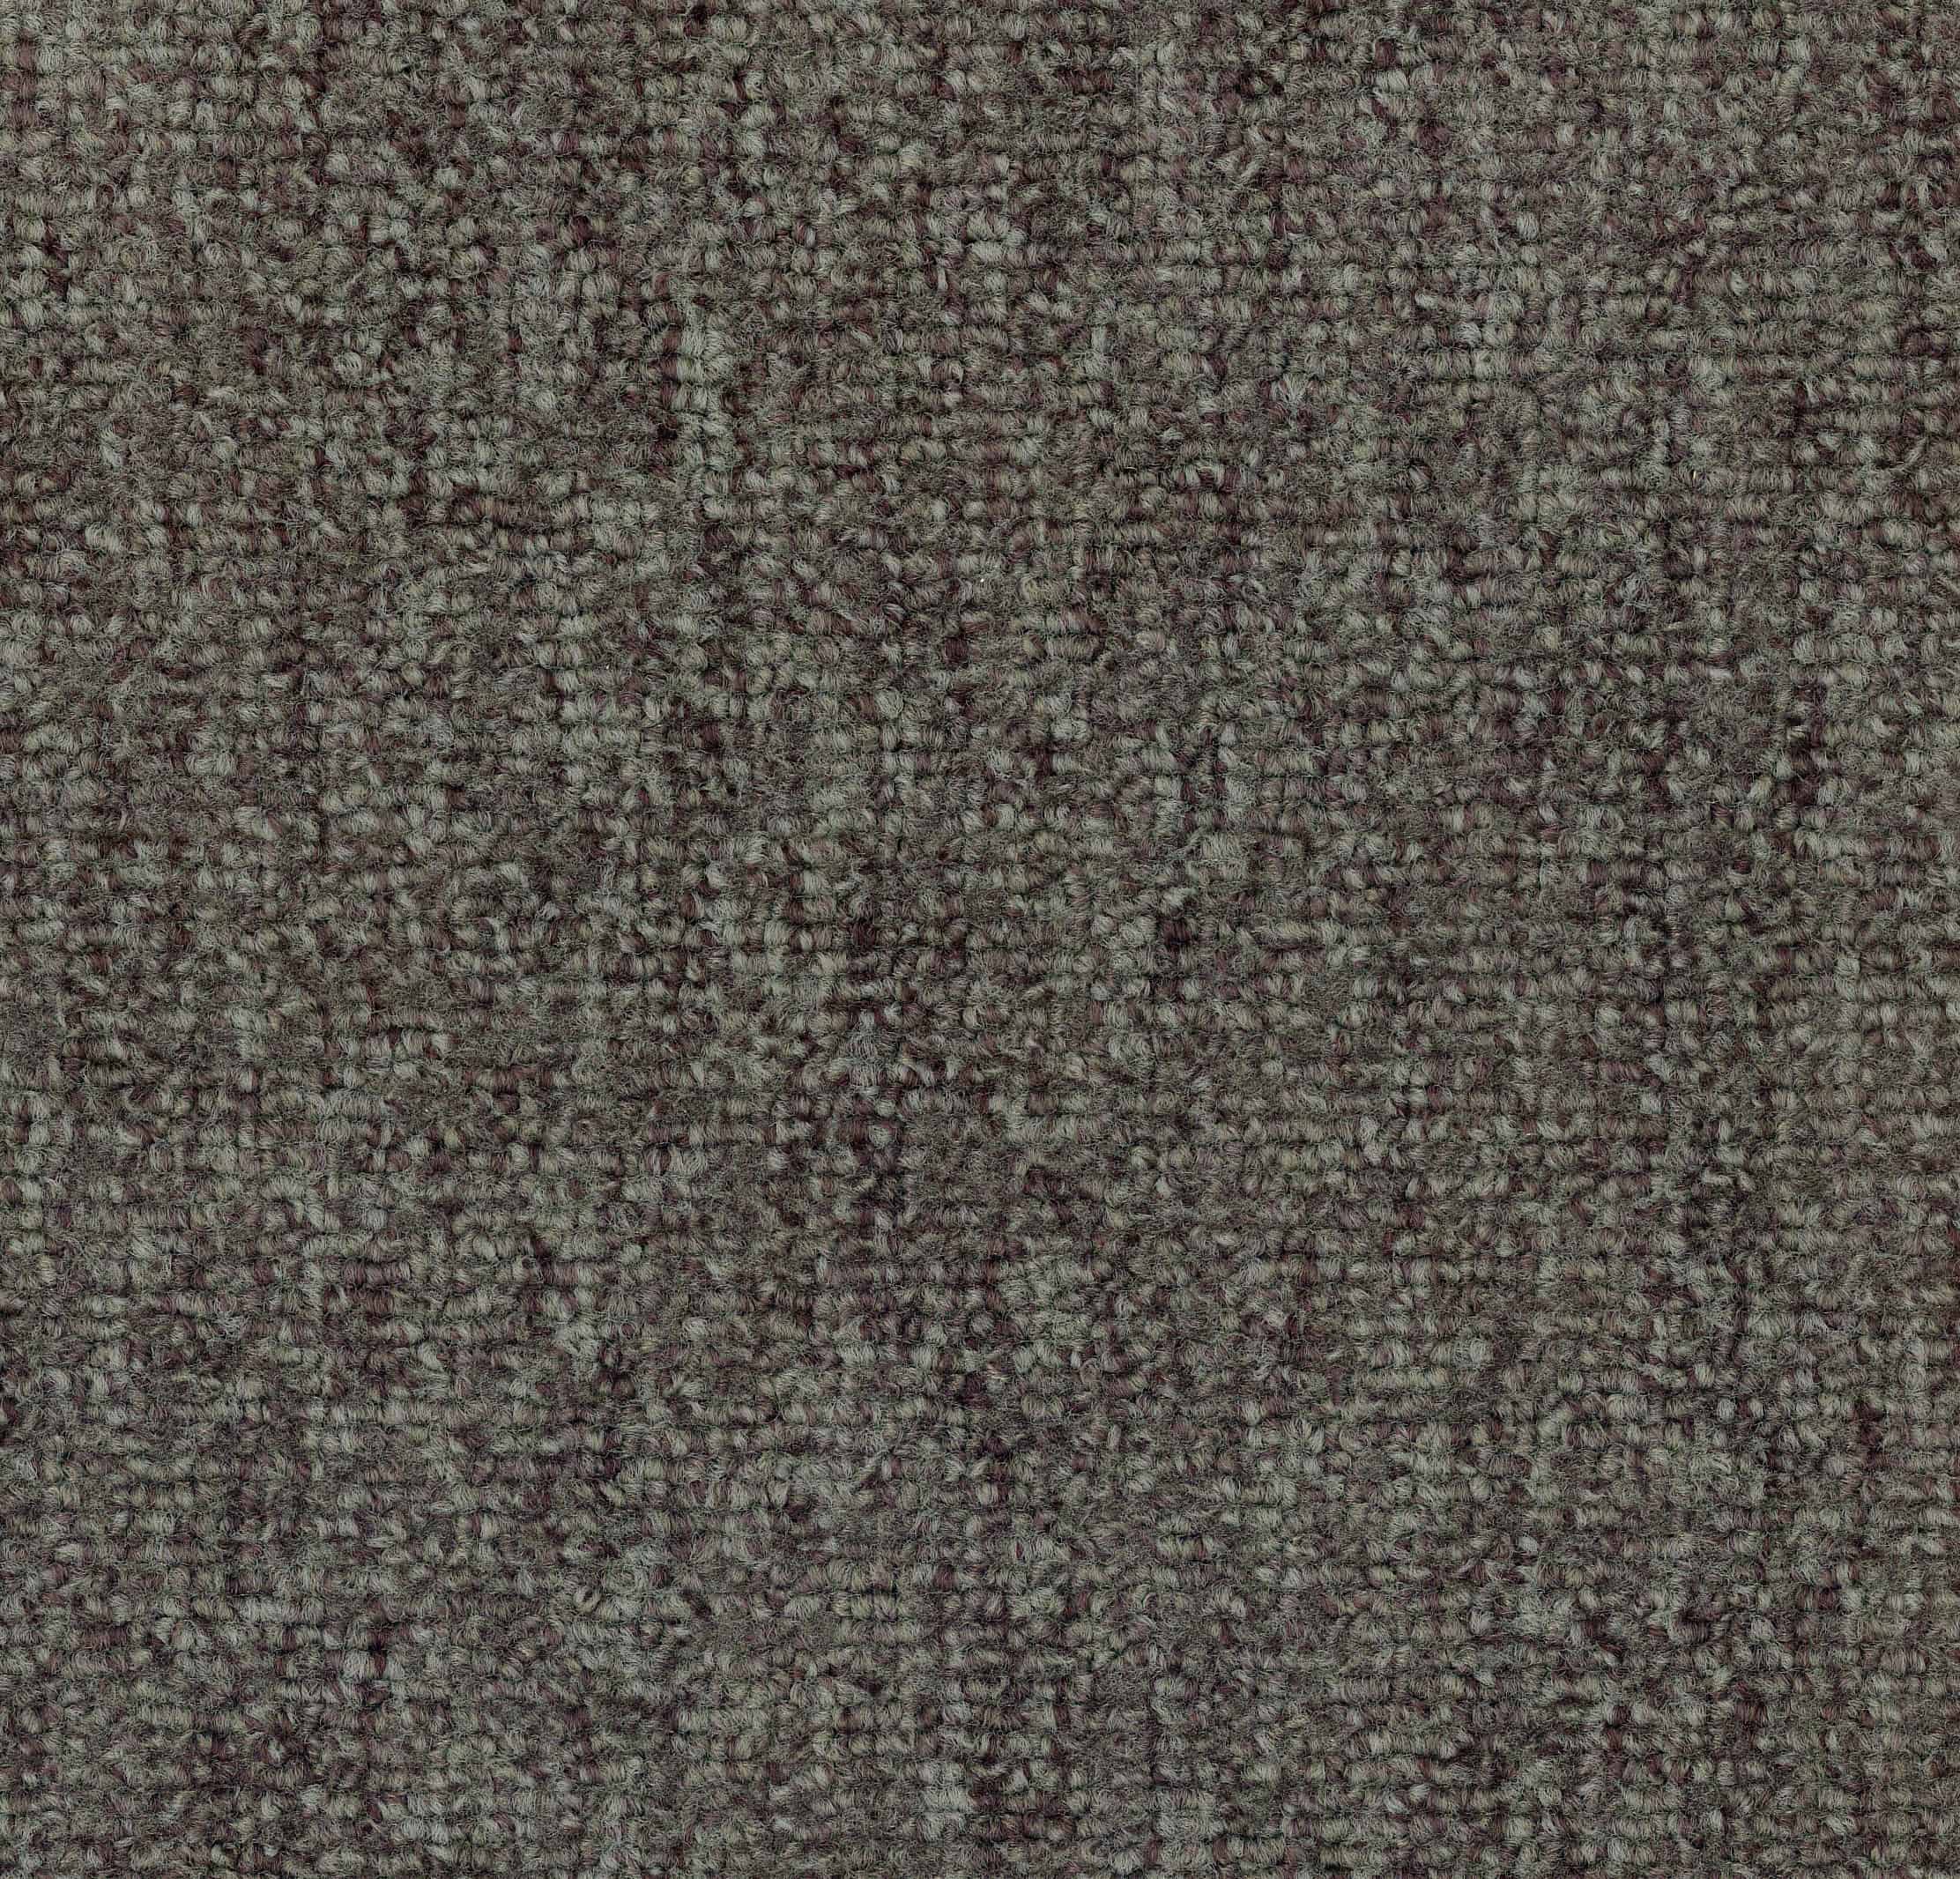 1348_Broad Foundation_1342_Material_Carpet_Workstations